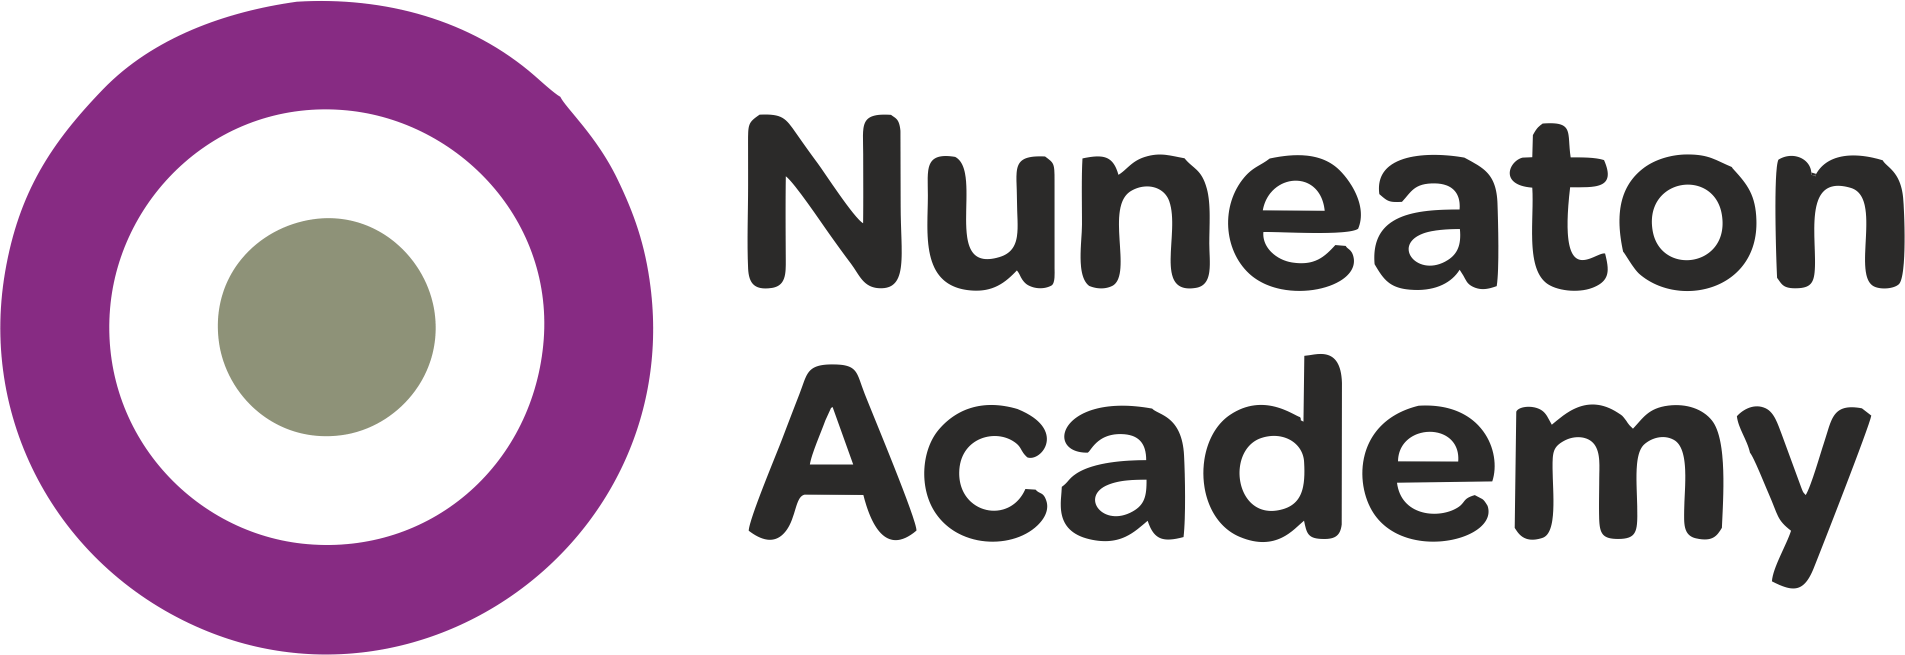 Nuneaton Academy